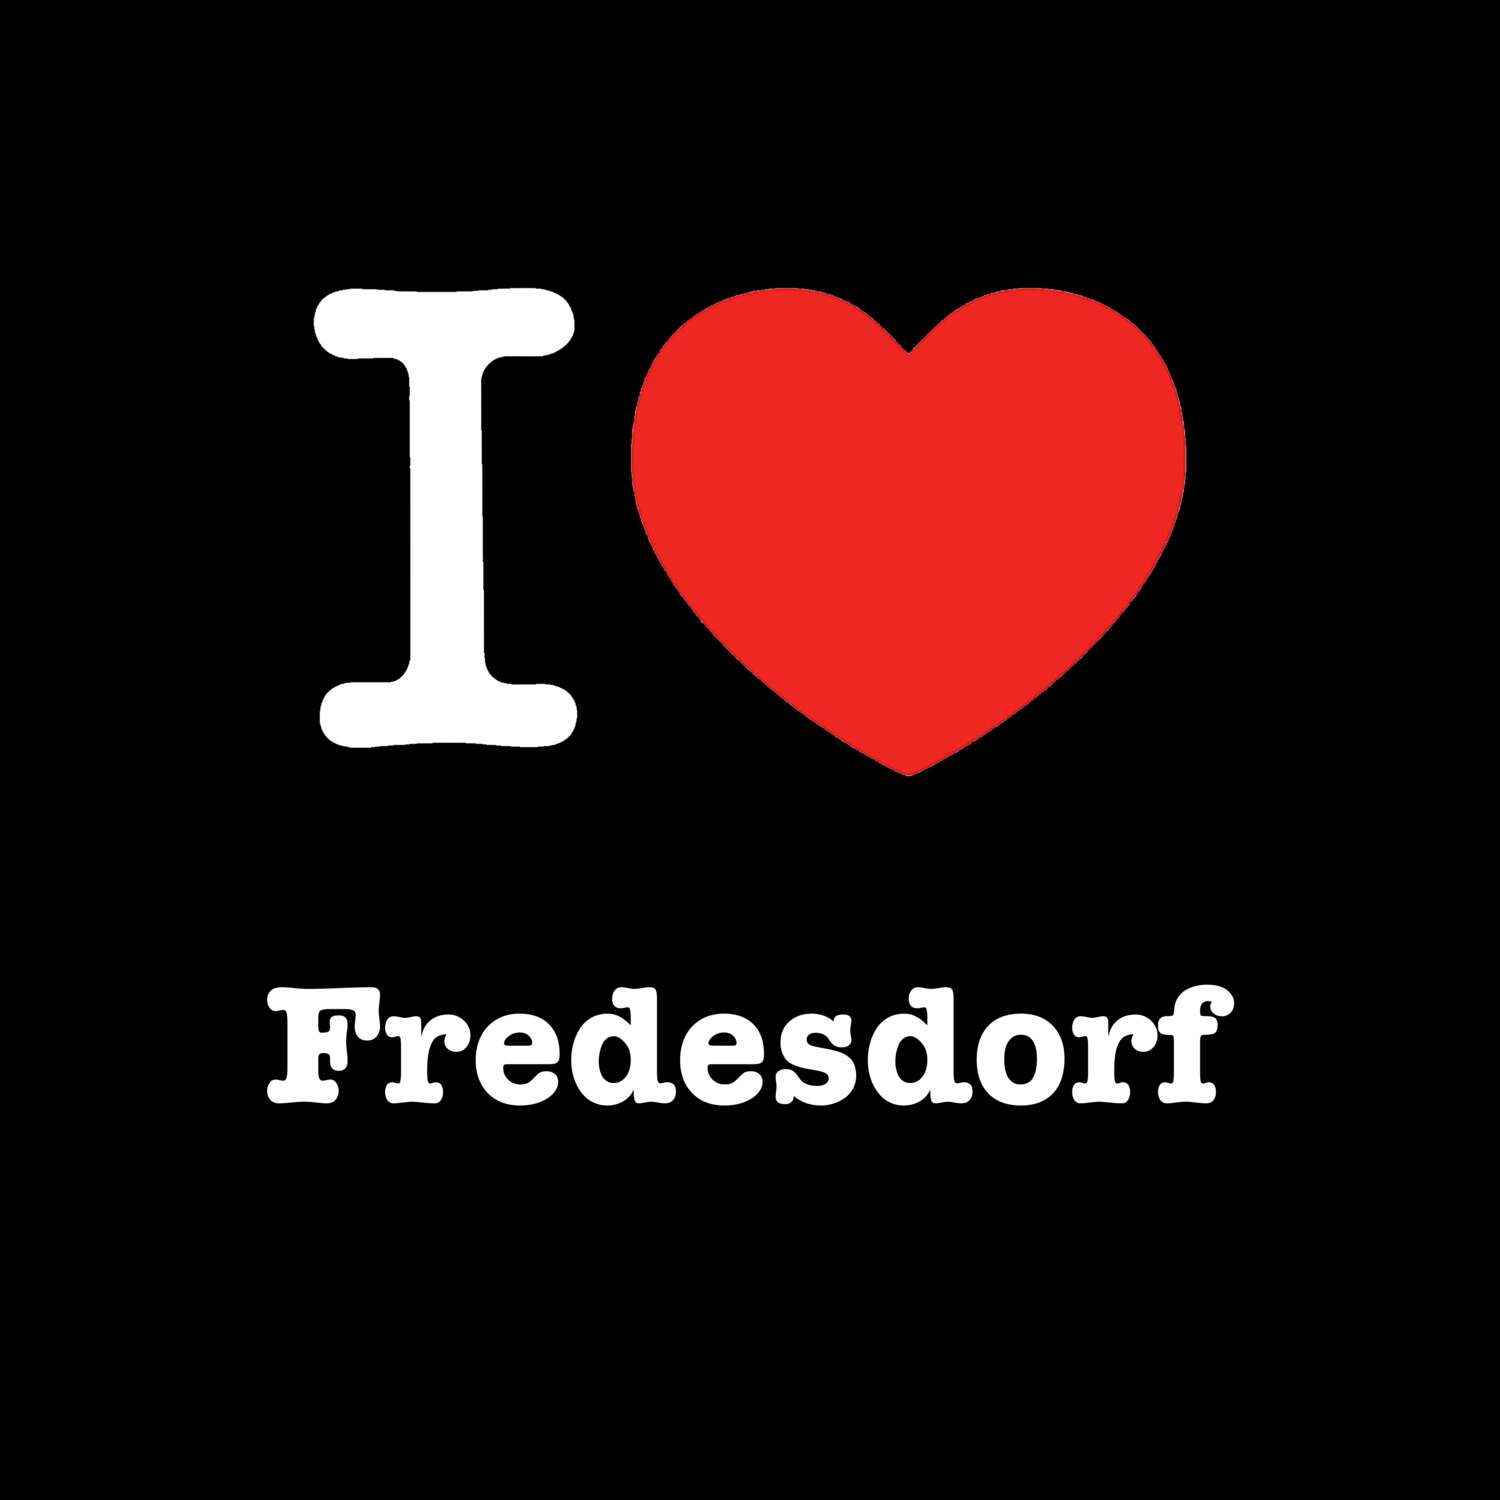 Fredesdorf T-Shirt »I love«